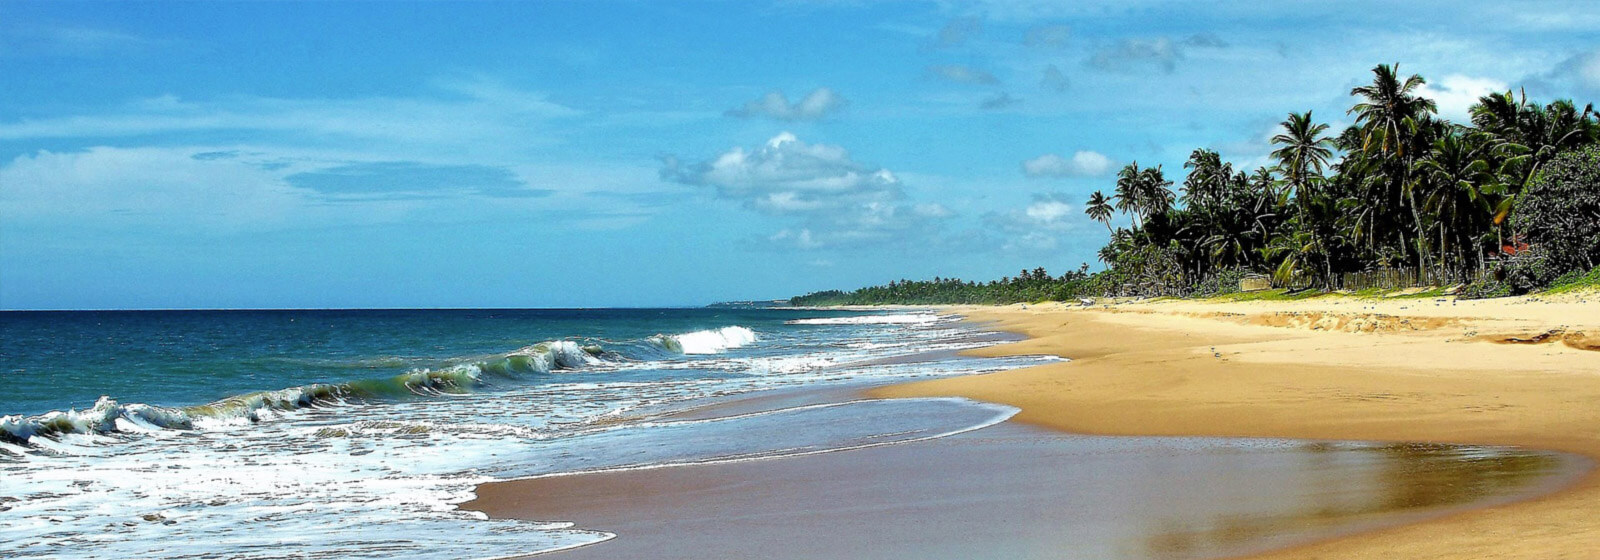 Beach image slide